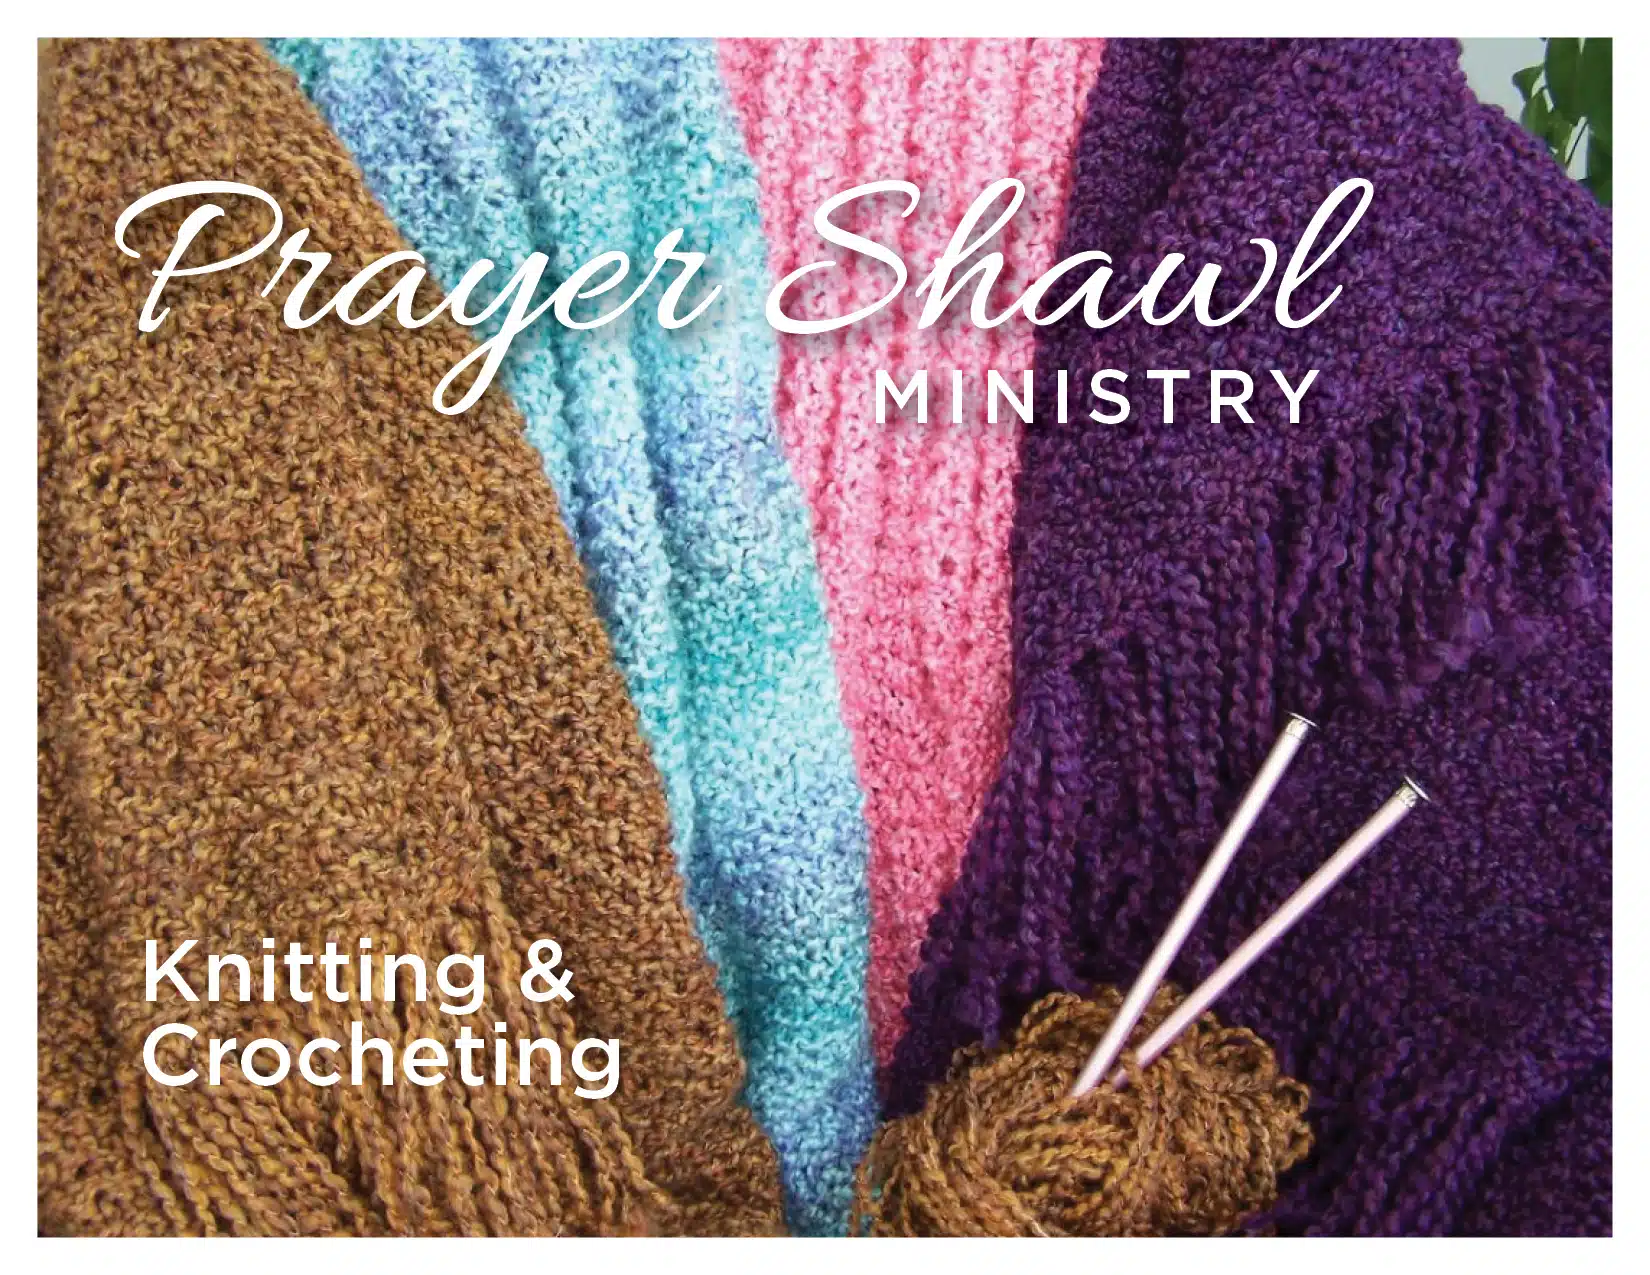 Prayer shawls